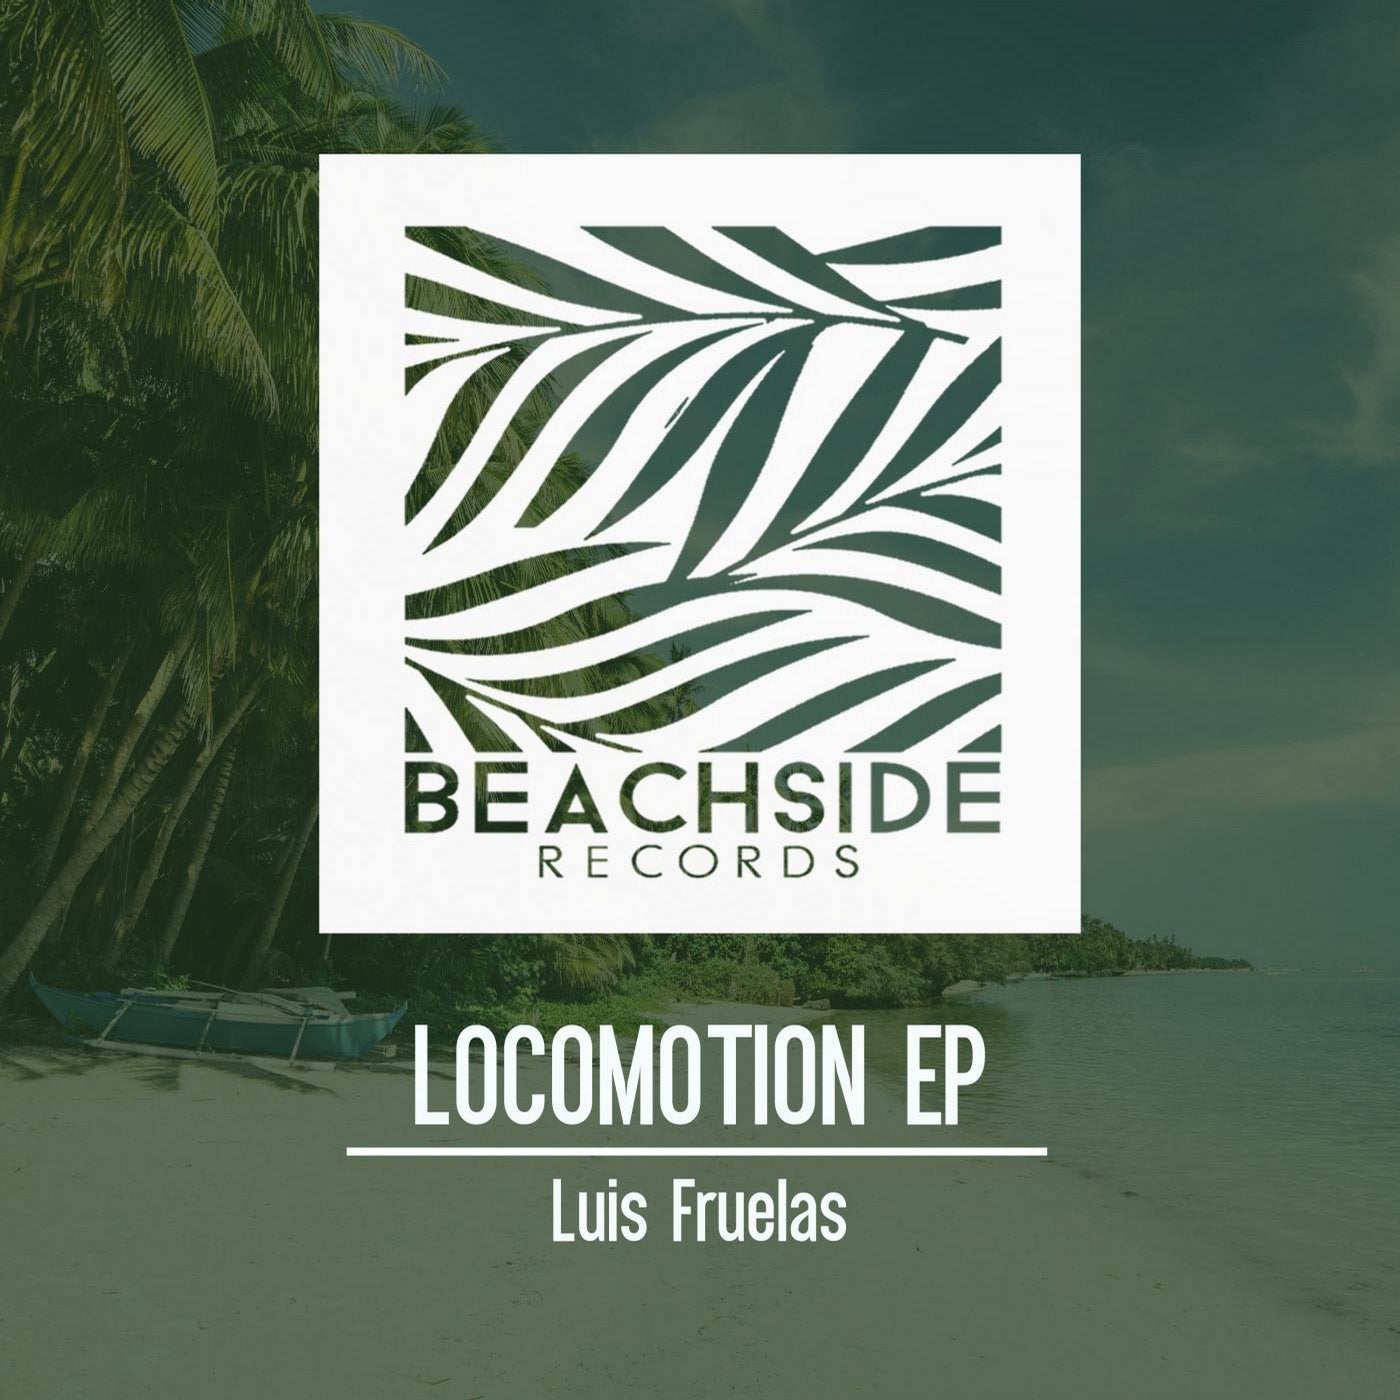 Locomotion EP